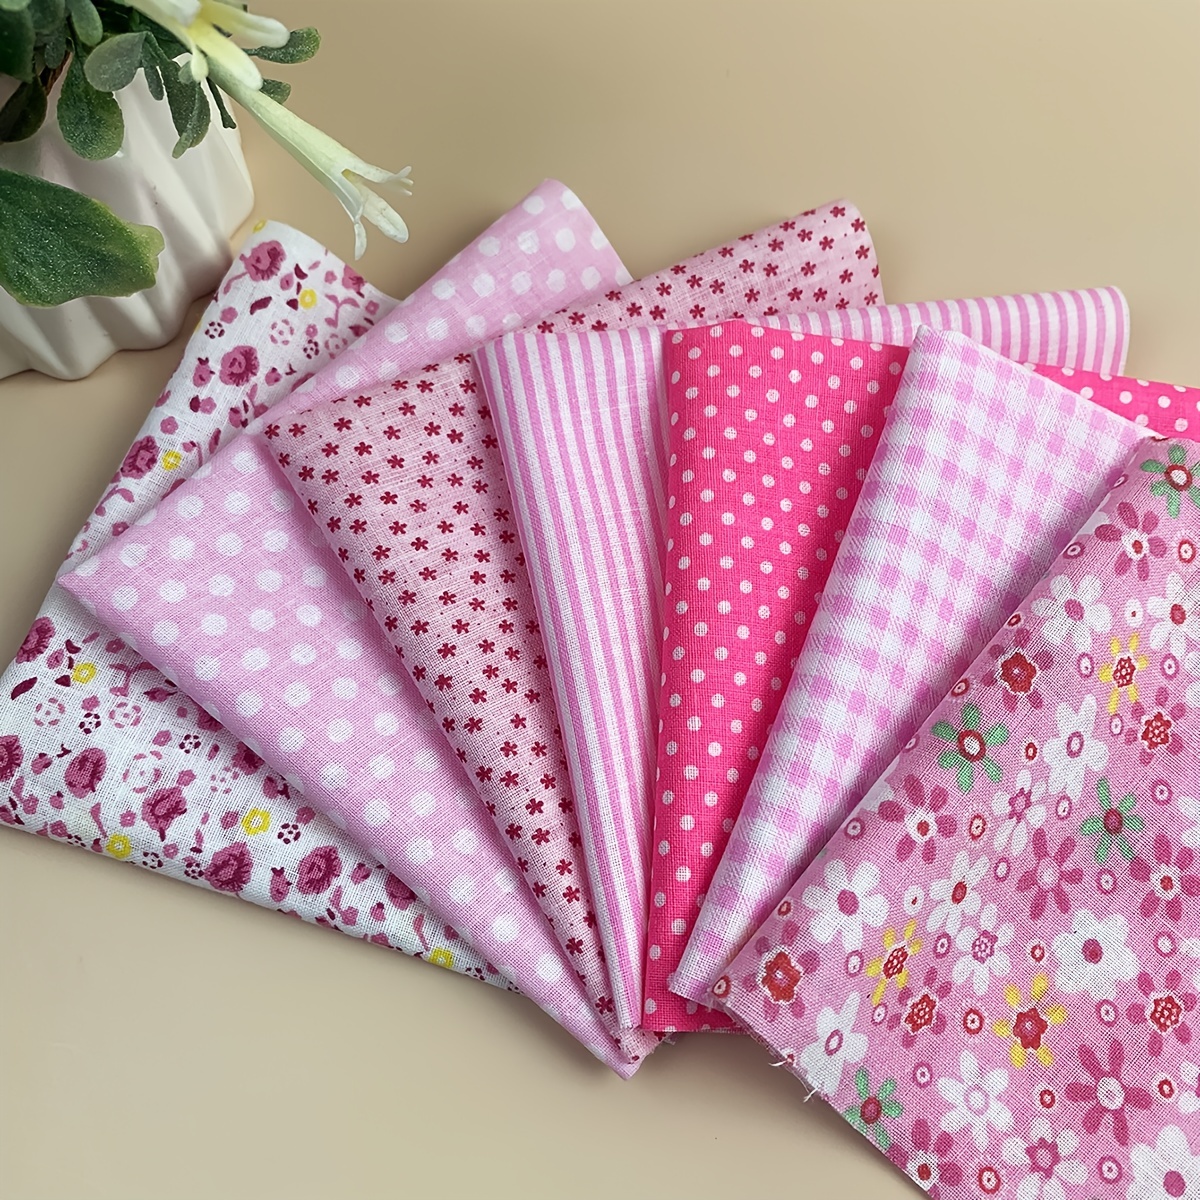 7pcs 9 8 x 9 8 Pink Cotton Fabric Print Sewing Fabric Needles Thread DIY Handmade Craft Accessories